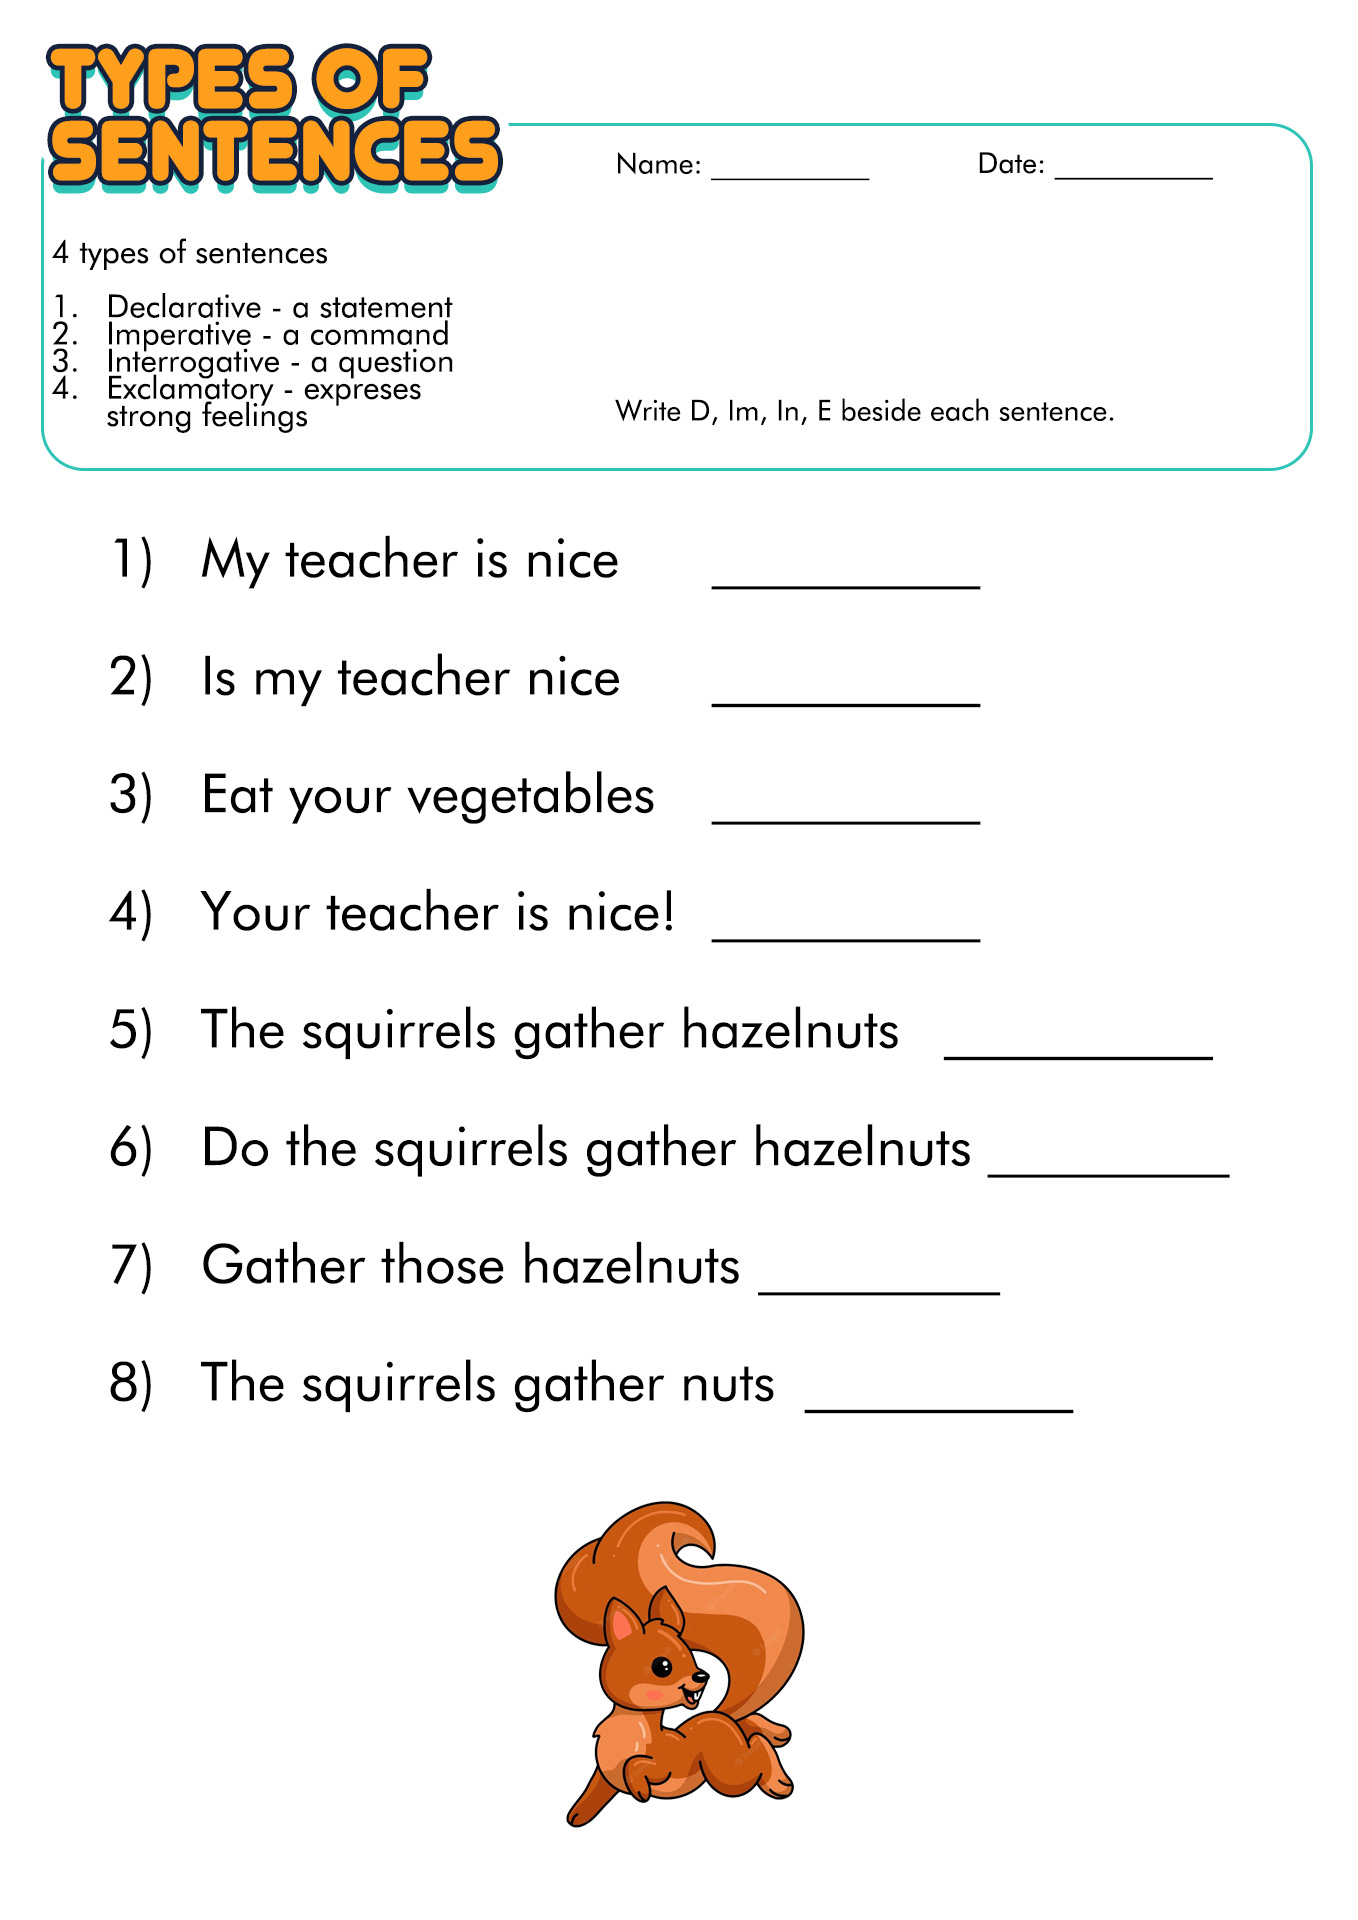 Identifying Sentence Types Worksheet Answers